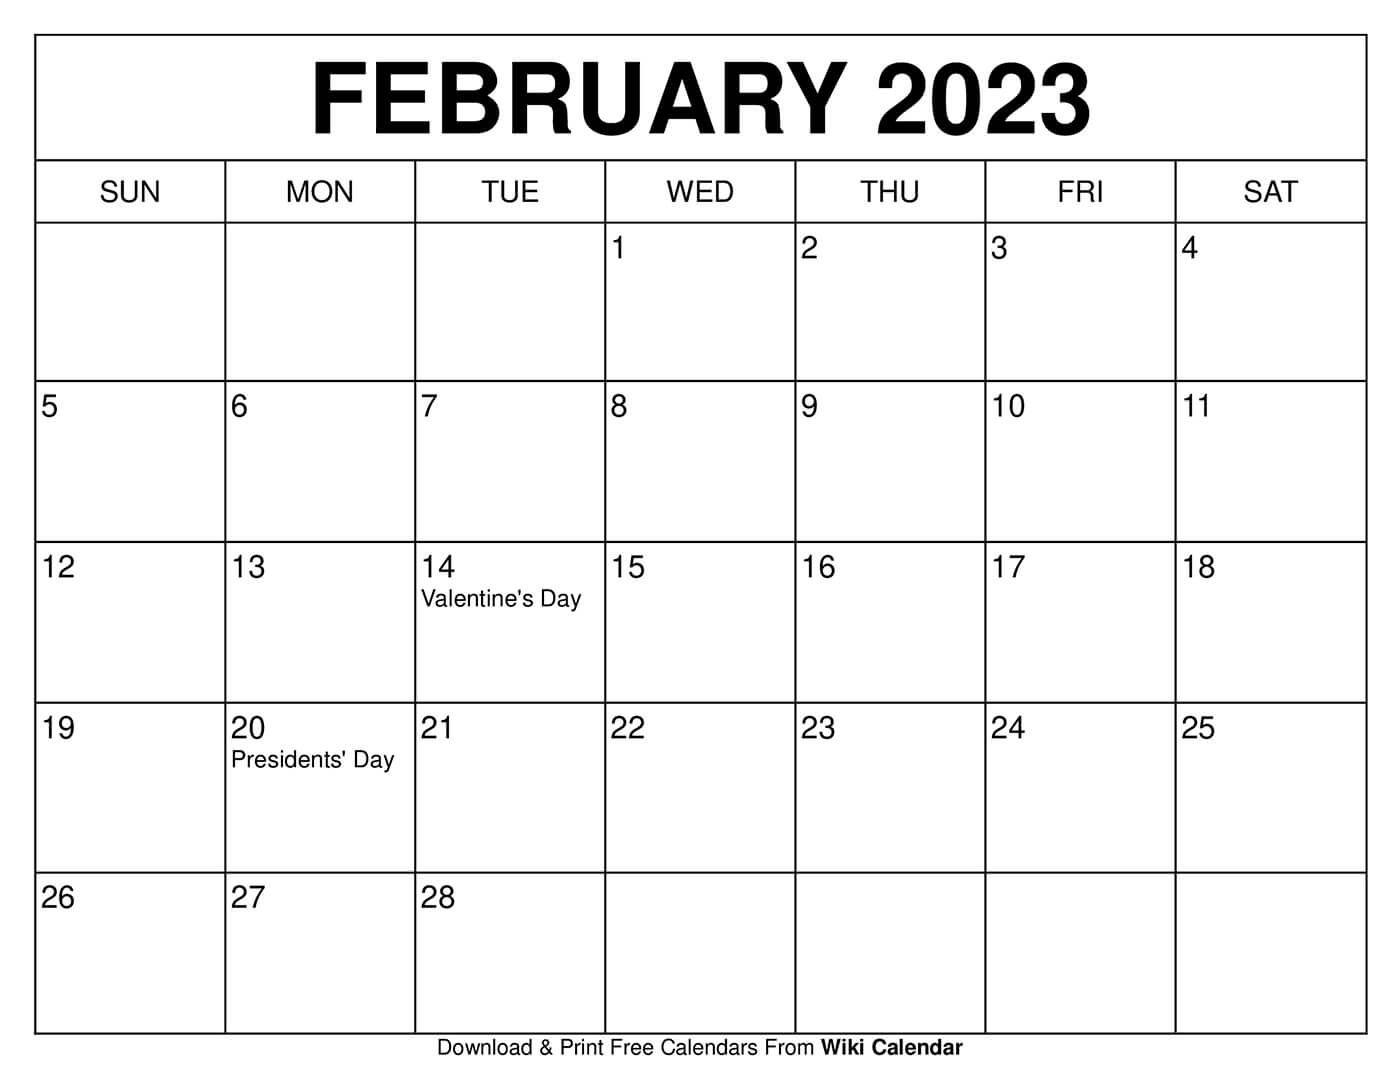 february-2023-calendar-printable-pdf-get-calender-2023-update